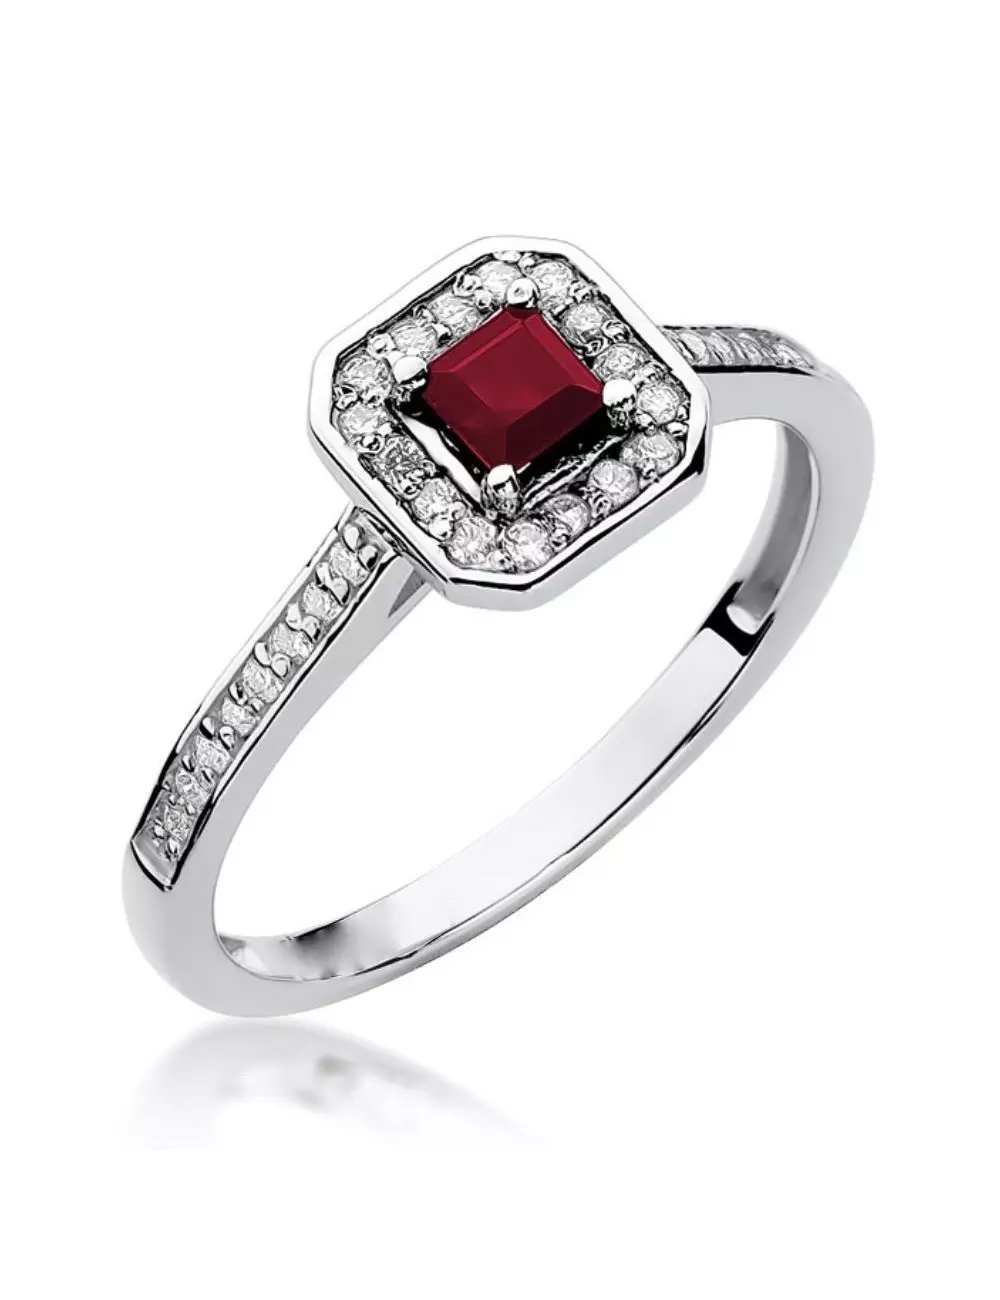 Rubino draugystė - modernaus halo dizaino žiedas su rubinu deimantais